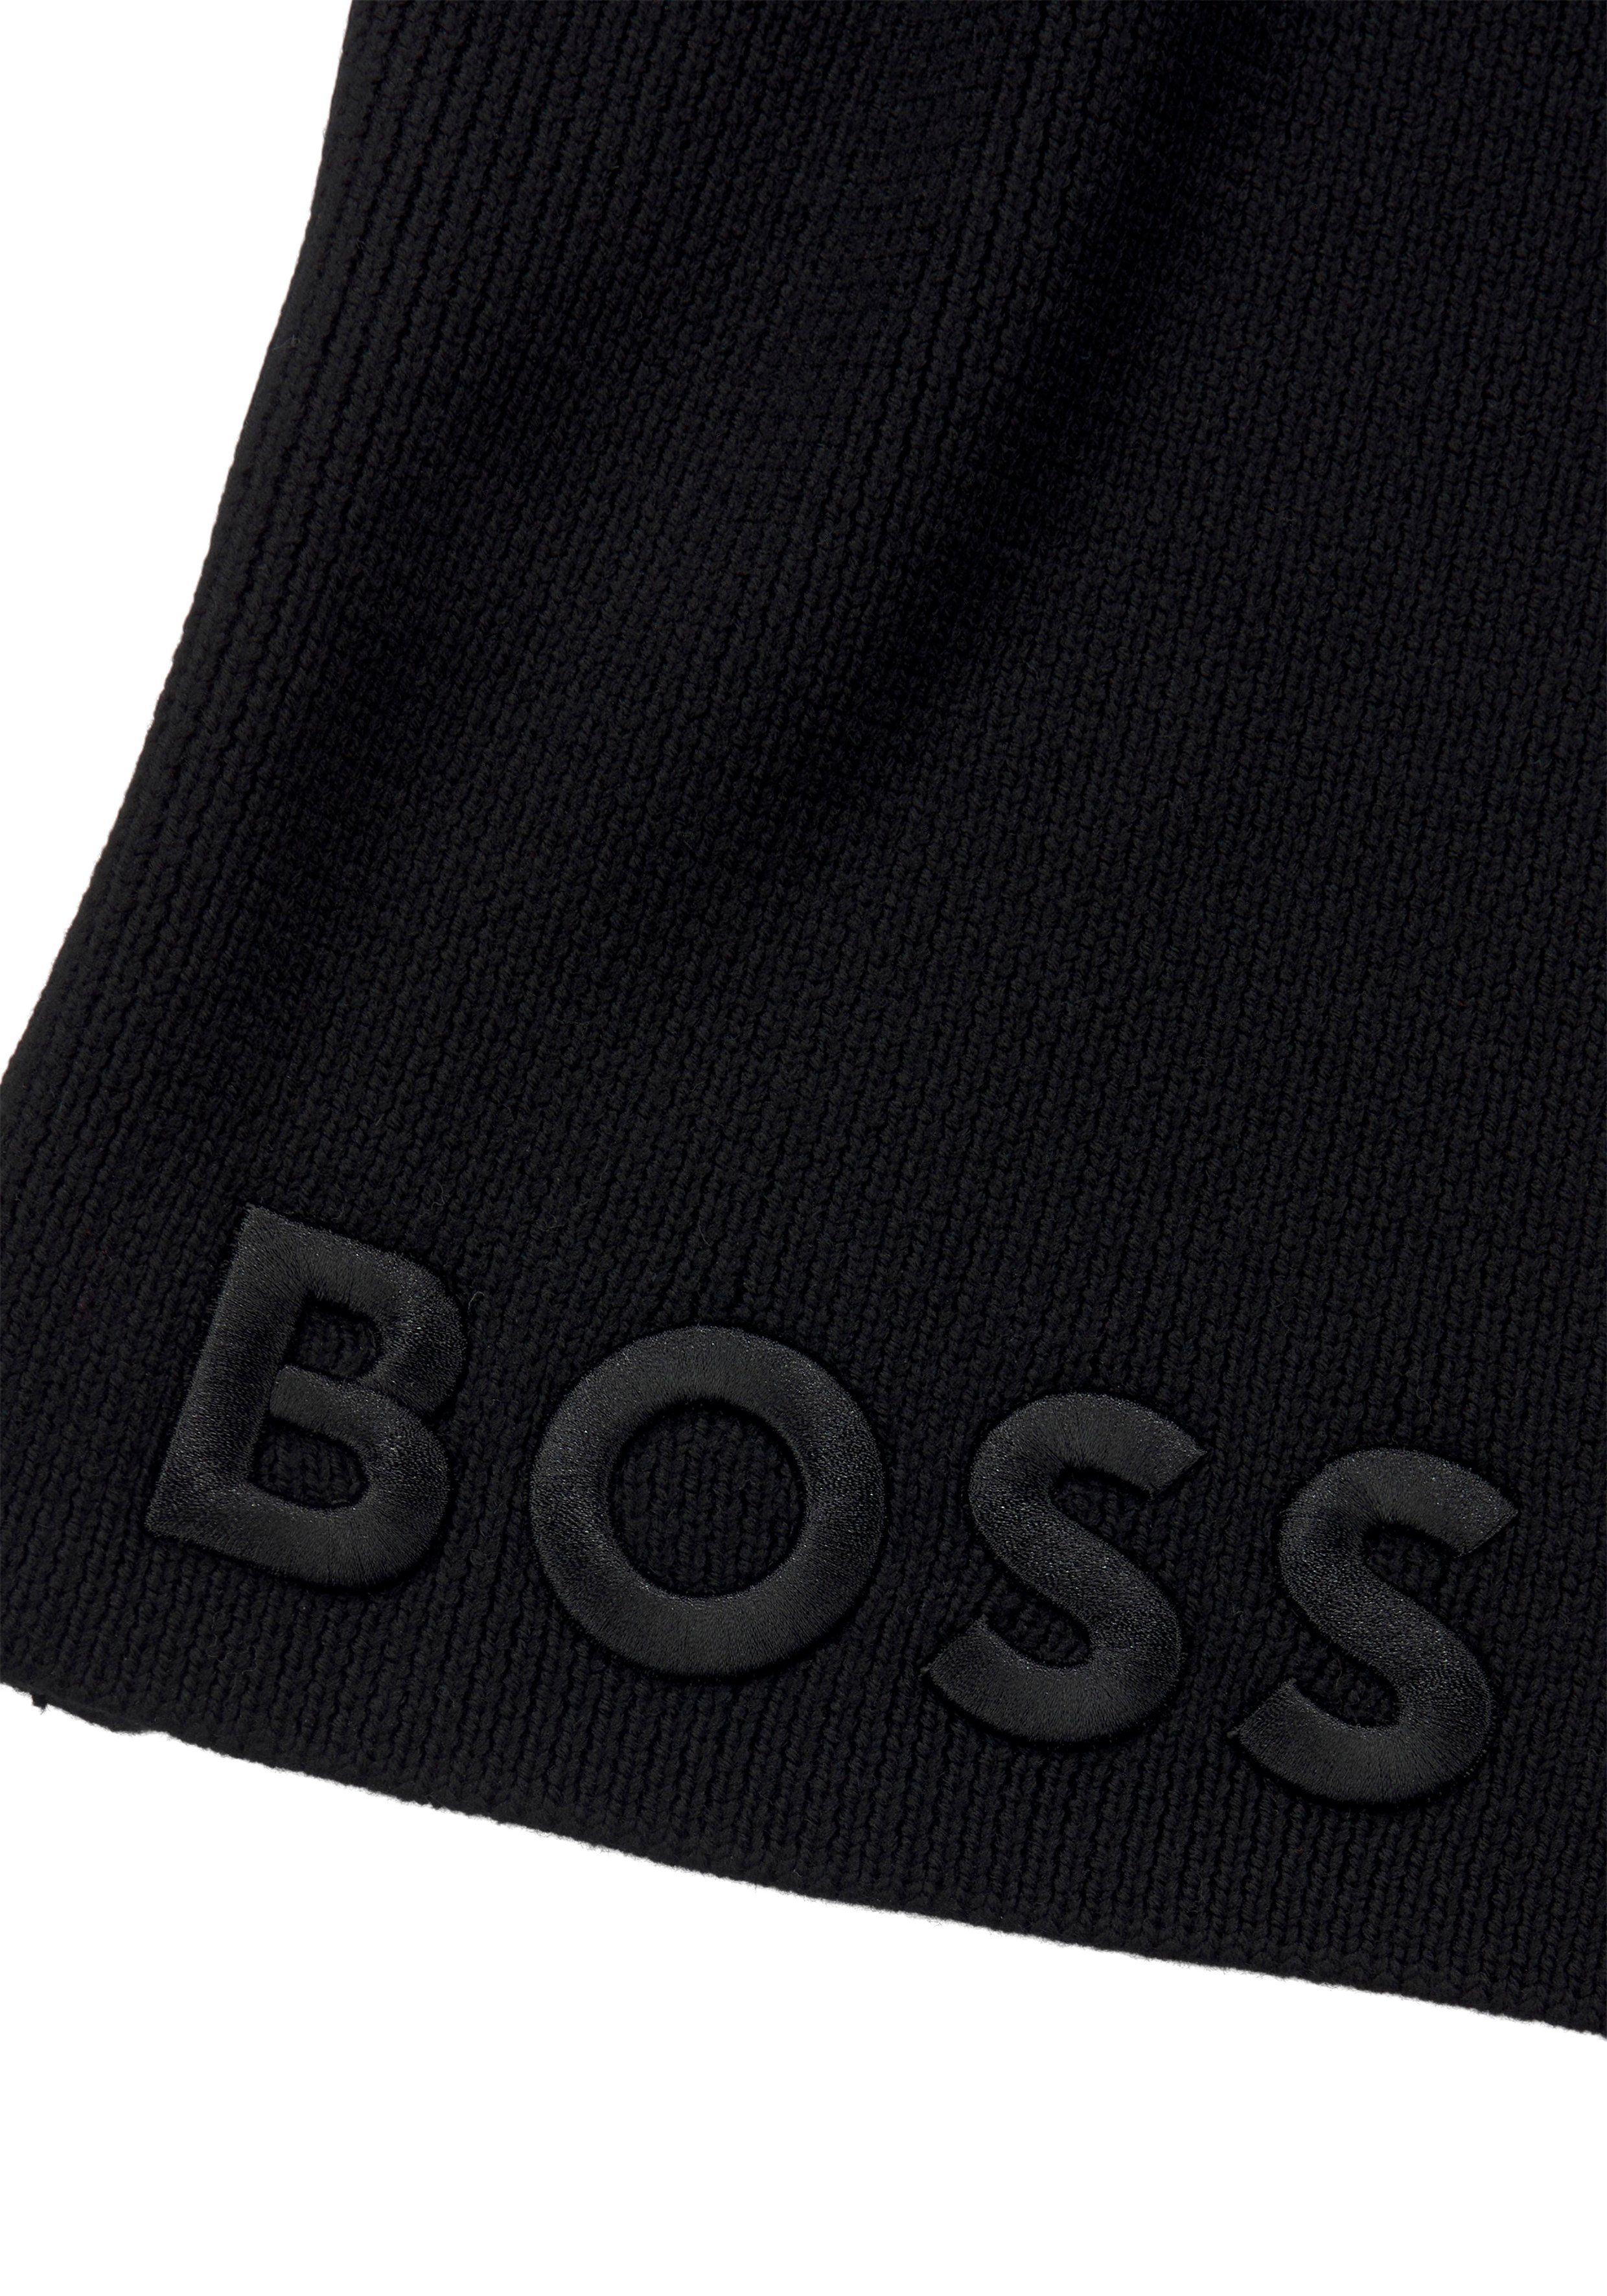 BOSS Schal Boss von Logo-Stickerei, tonaler Black Womanswear BOSS Lara_scarf, Schal mit